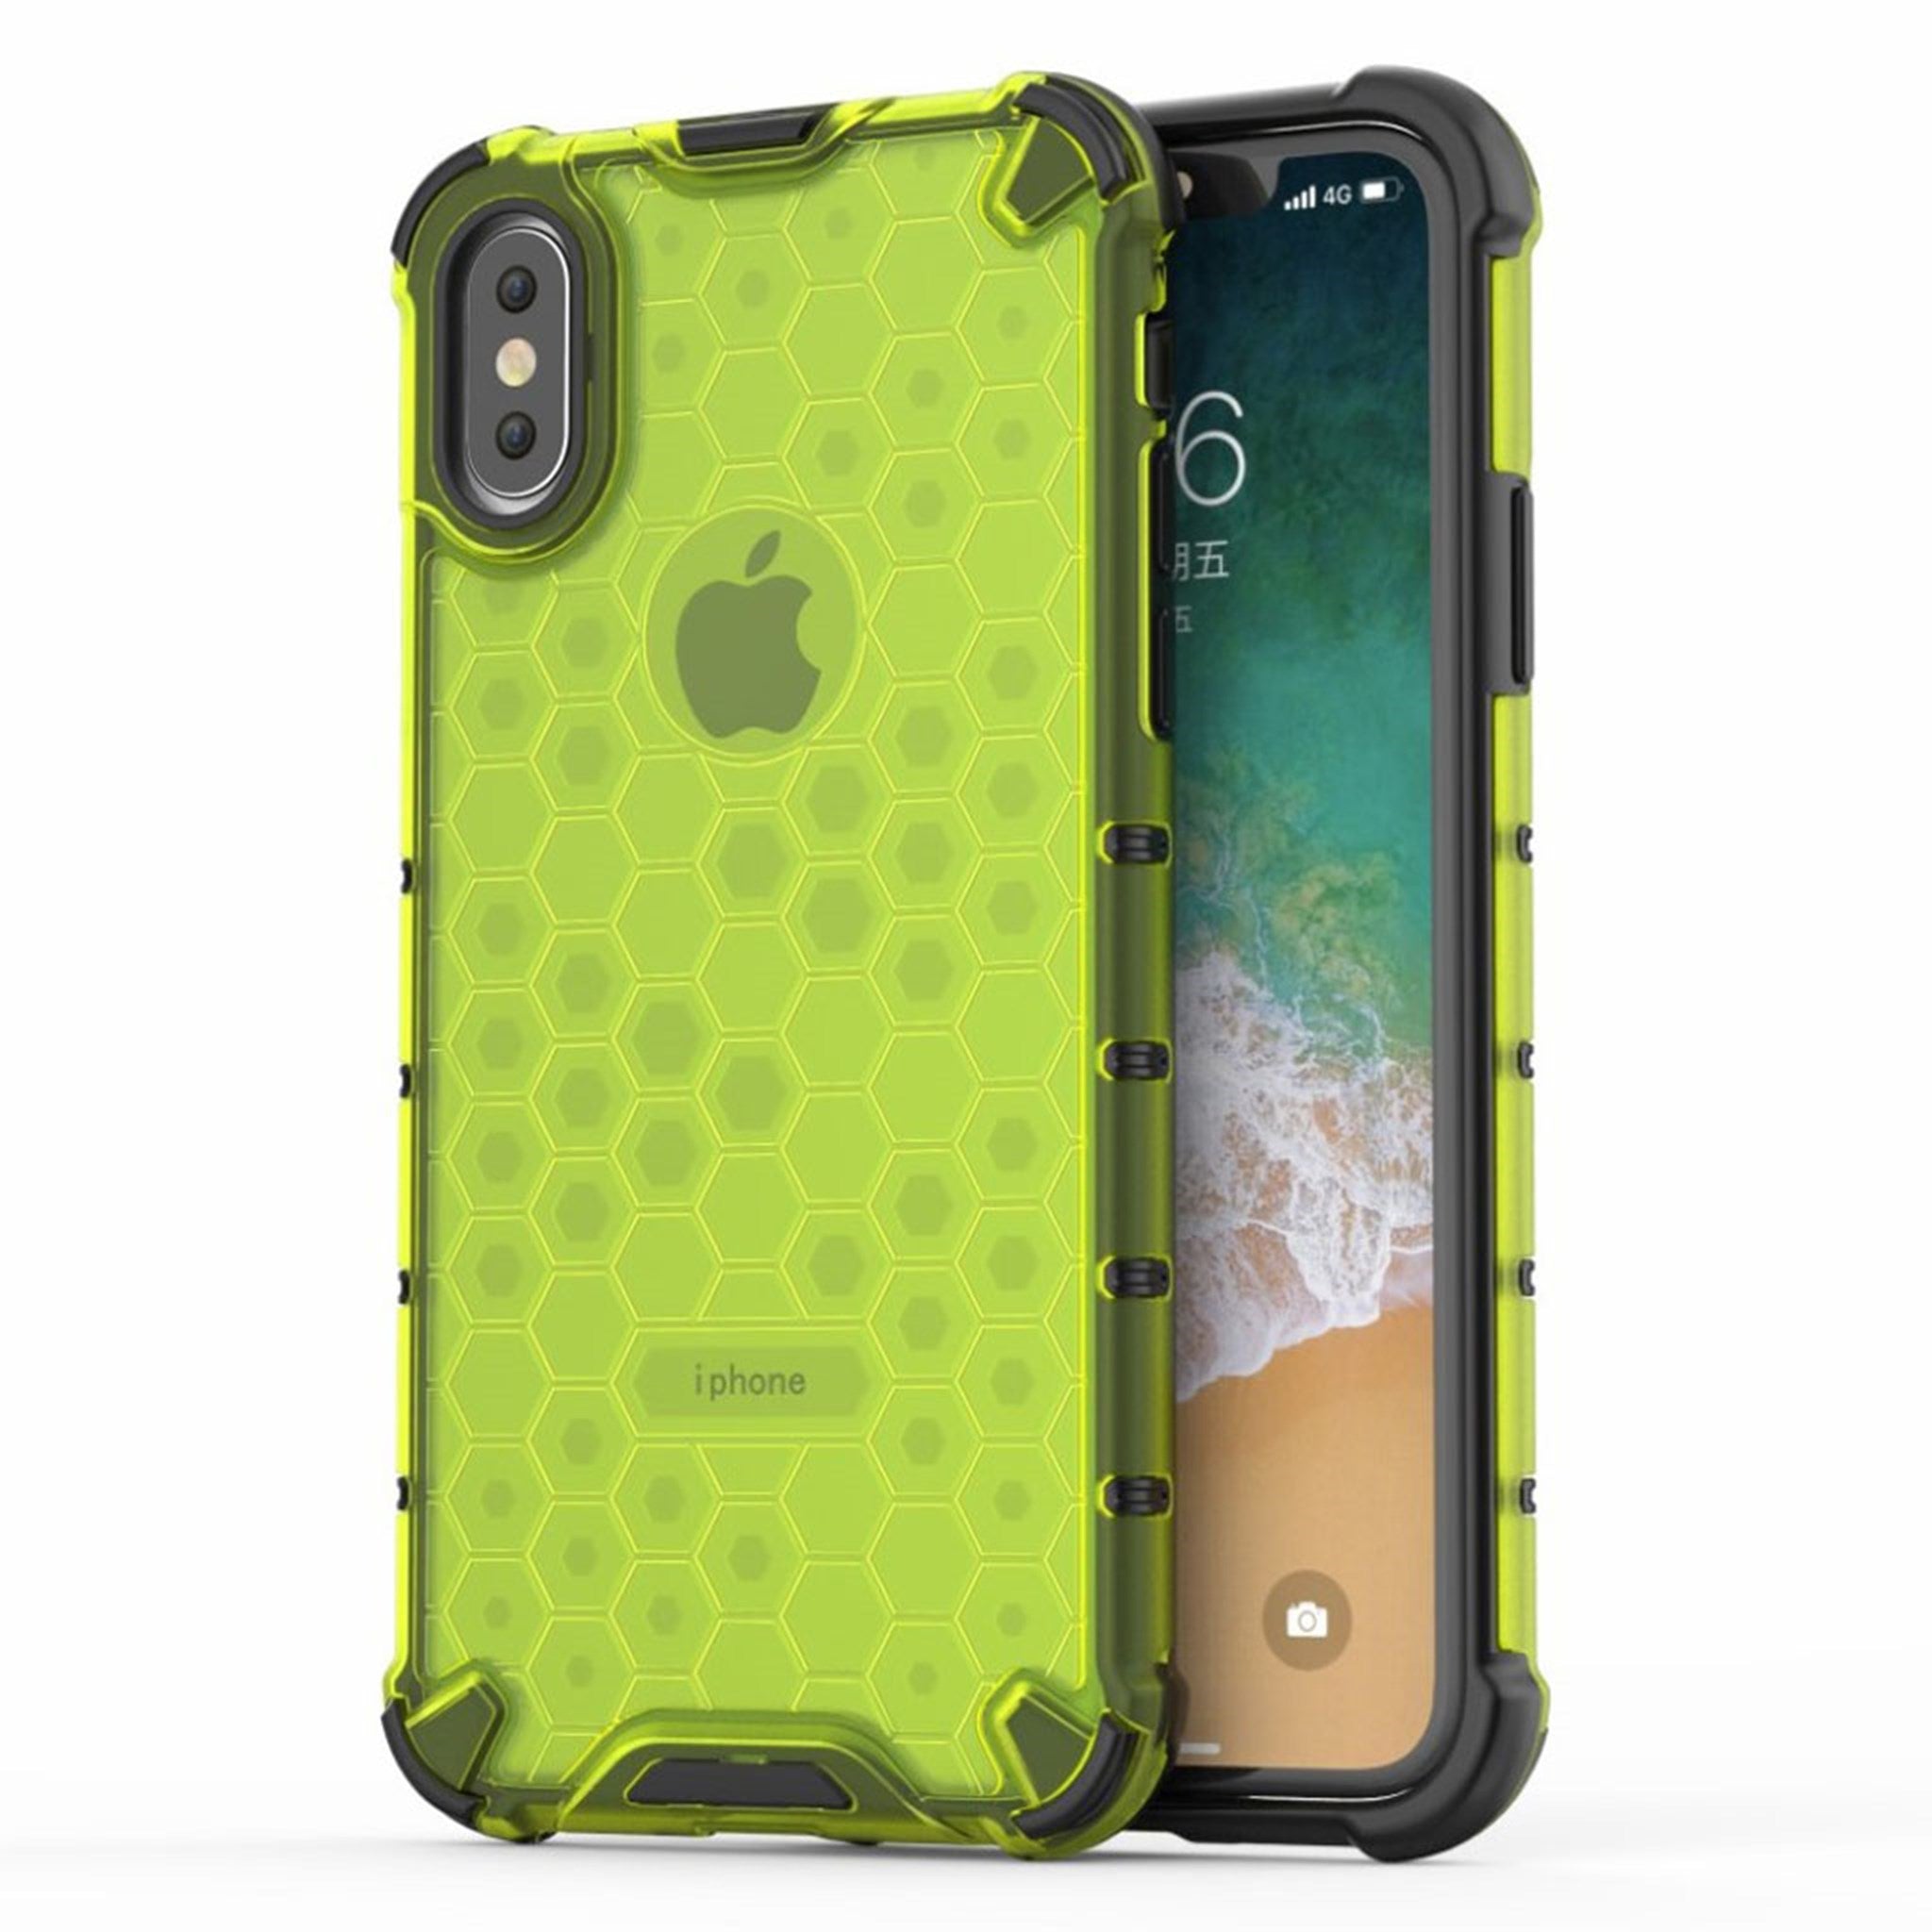 Bofink Honeycomb iPhone XS case - Green